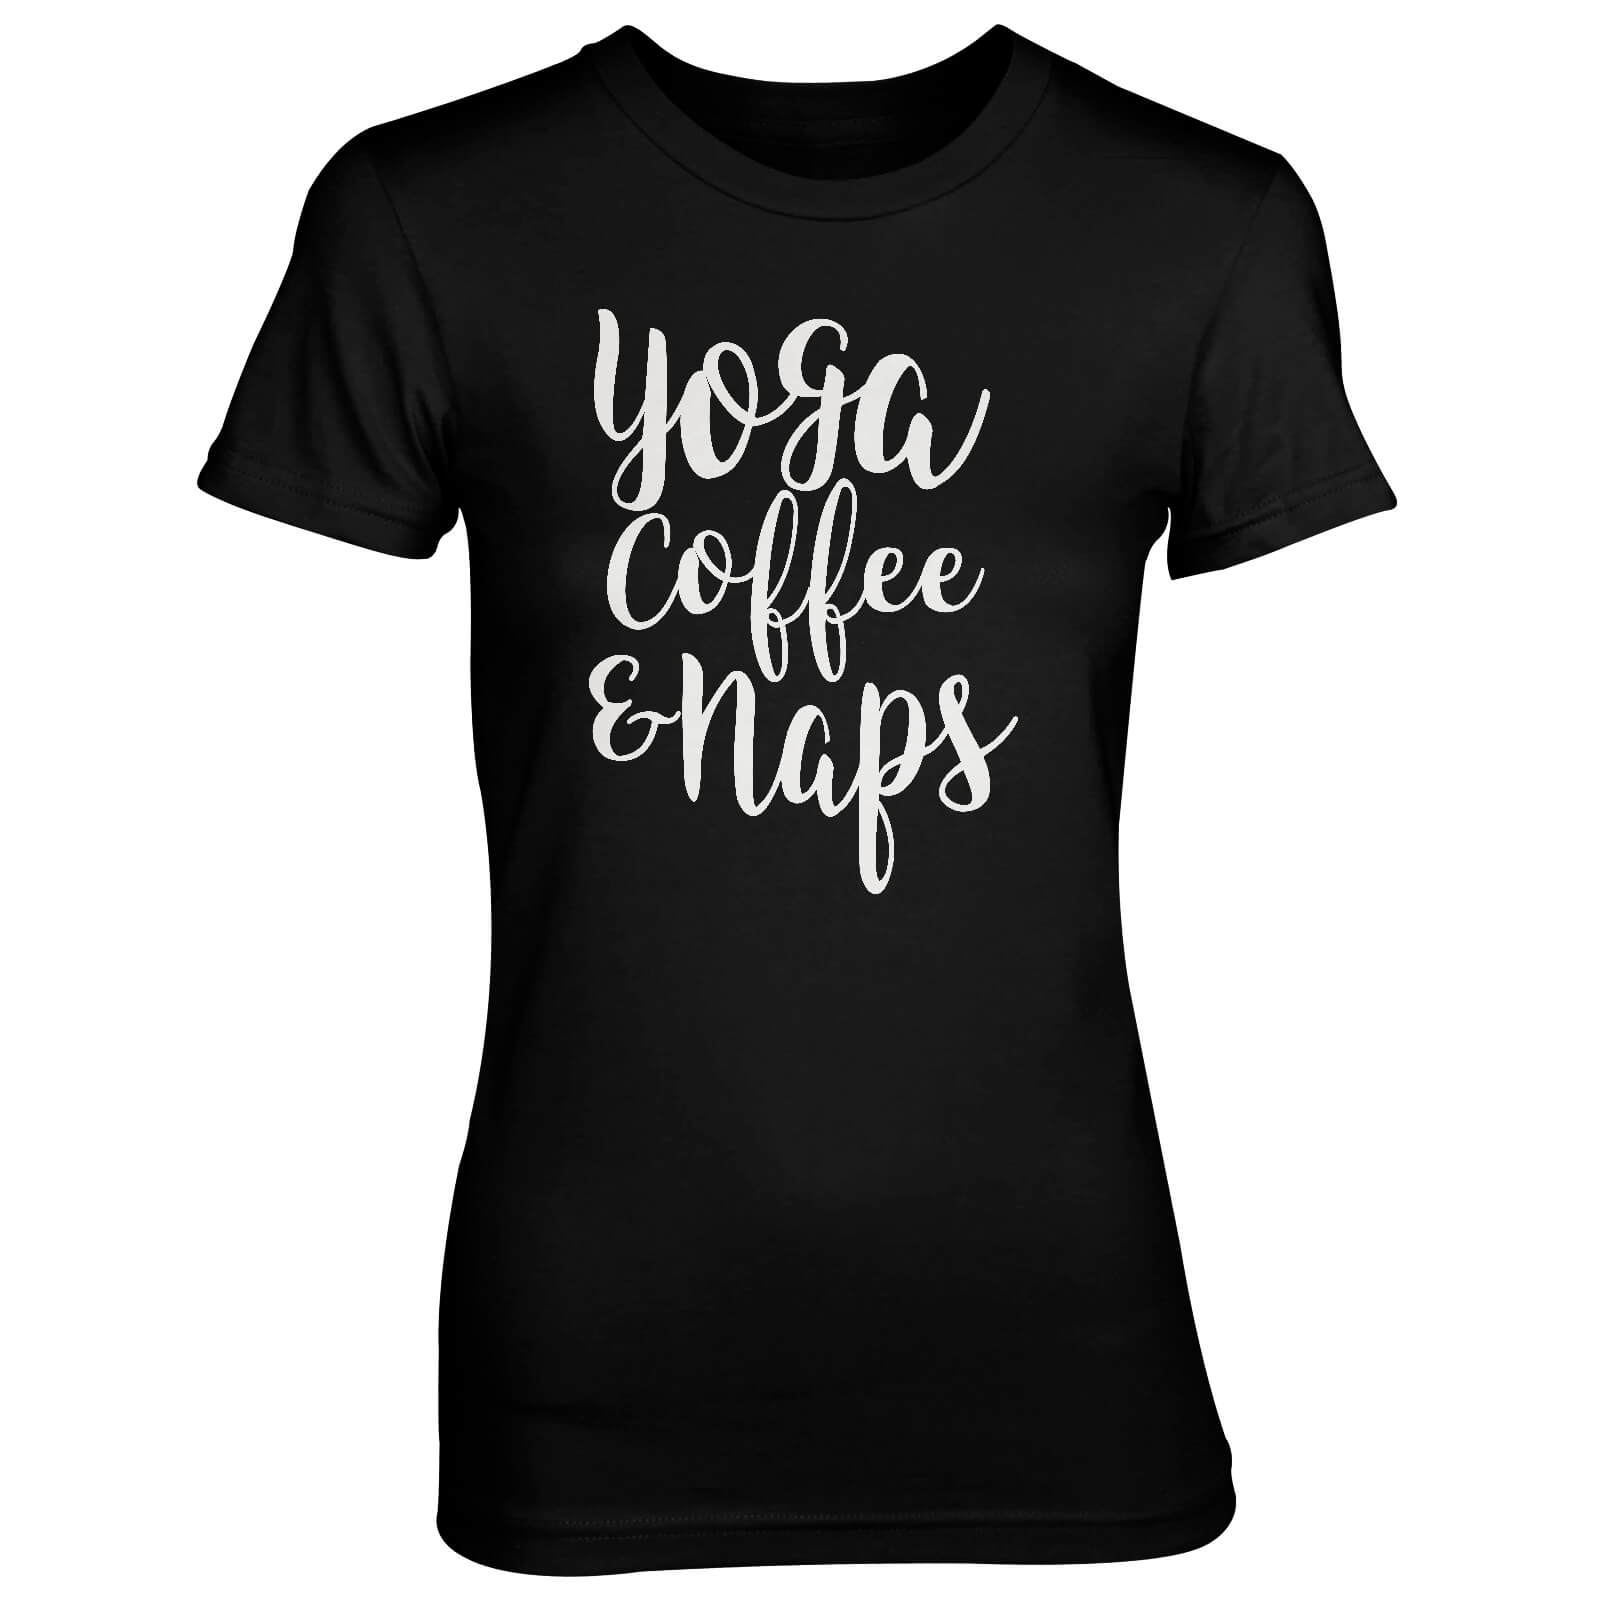 Yoga Coffee And Naps Women's Black T-Shirt - S - Black